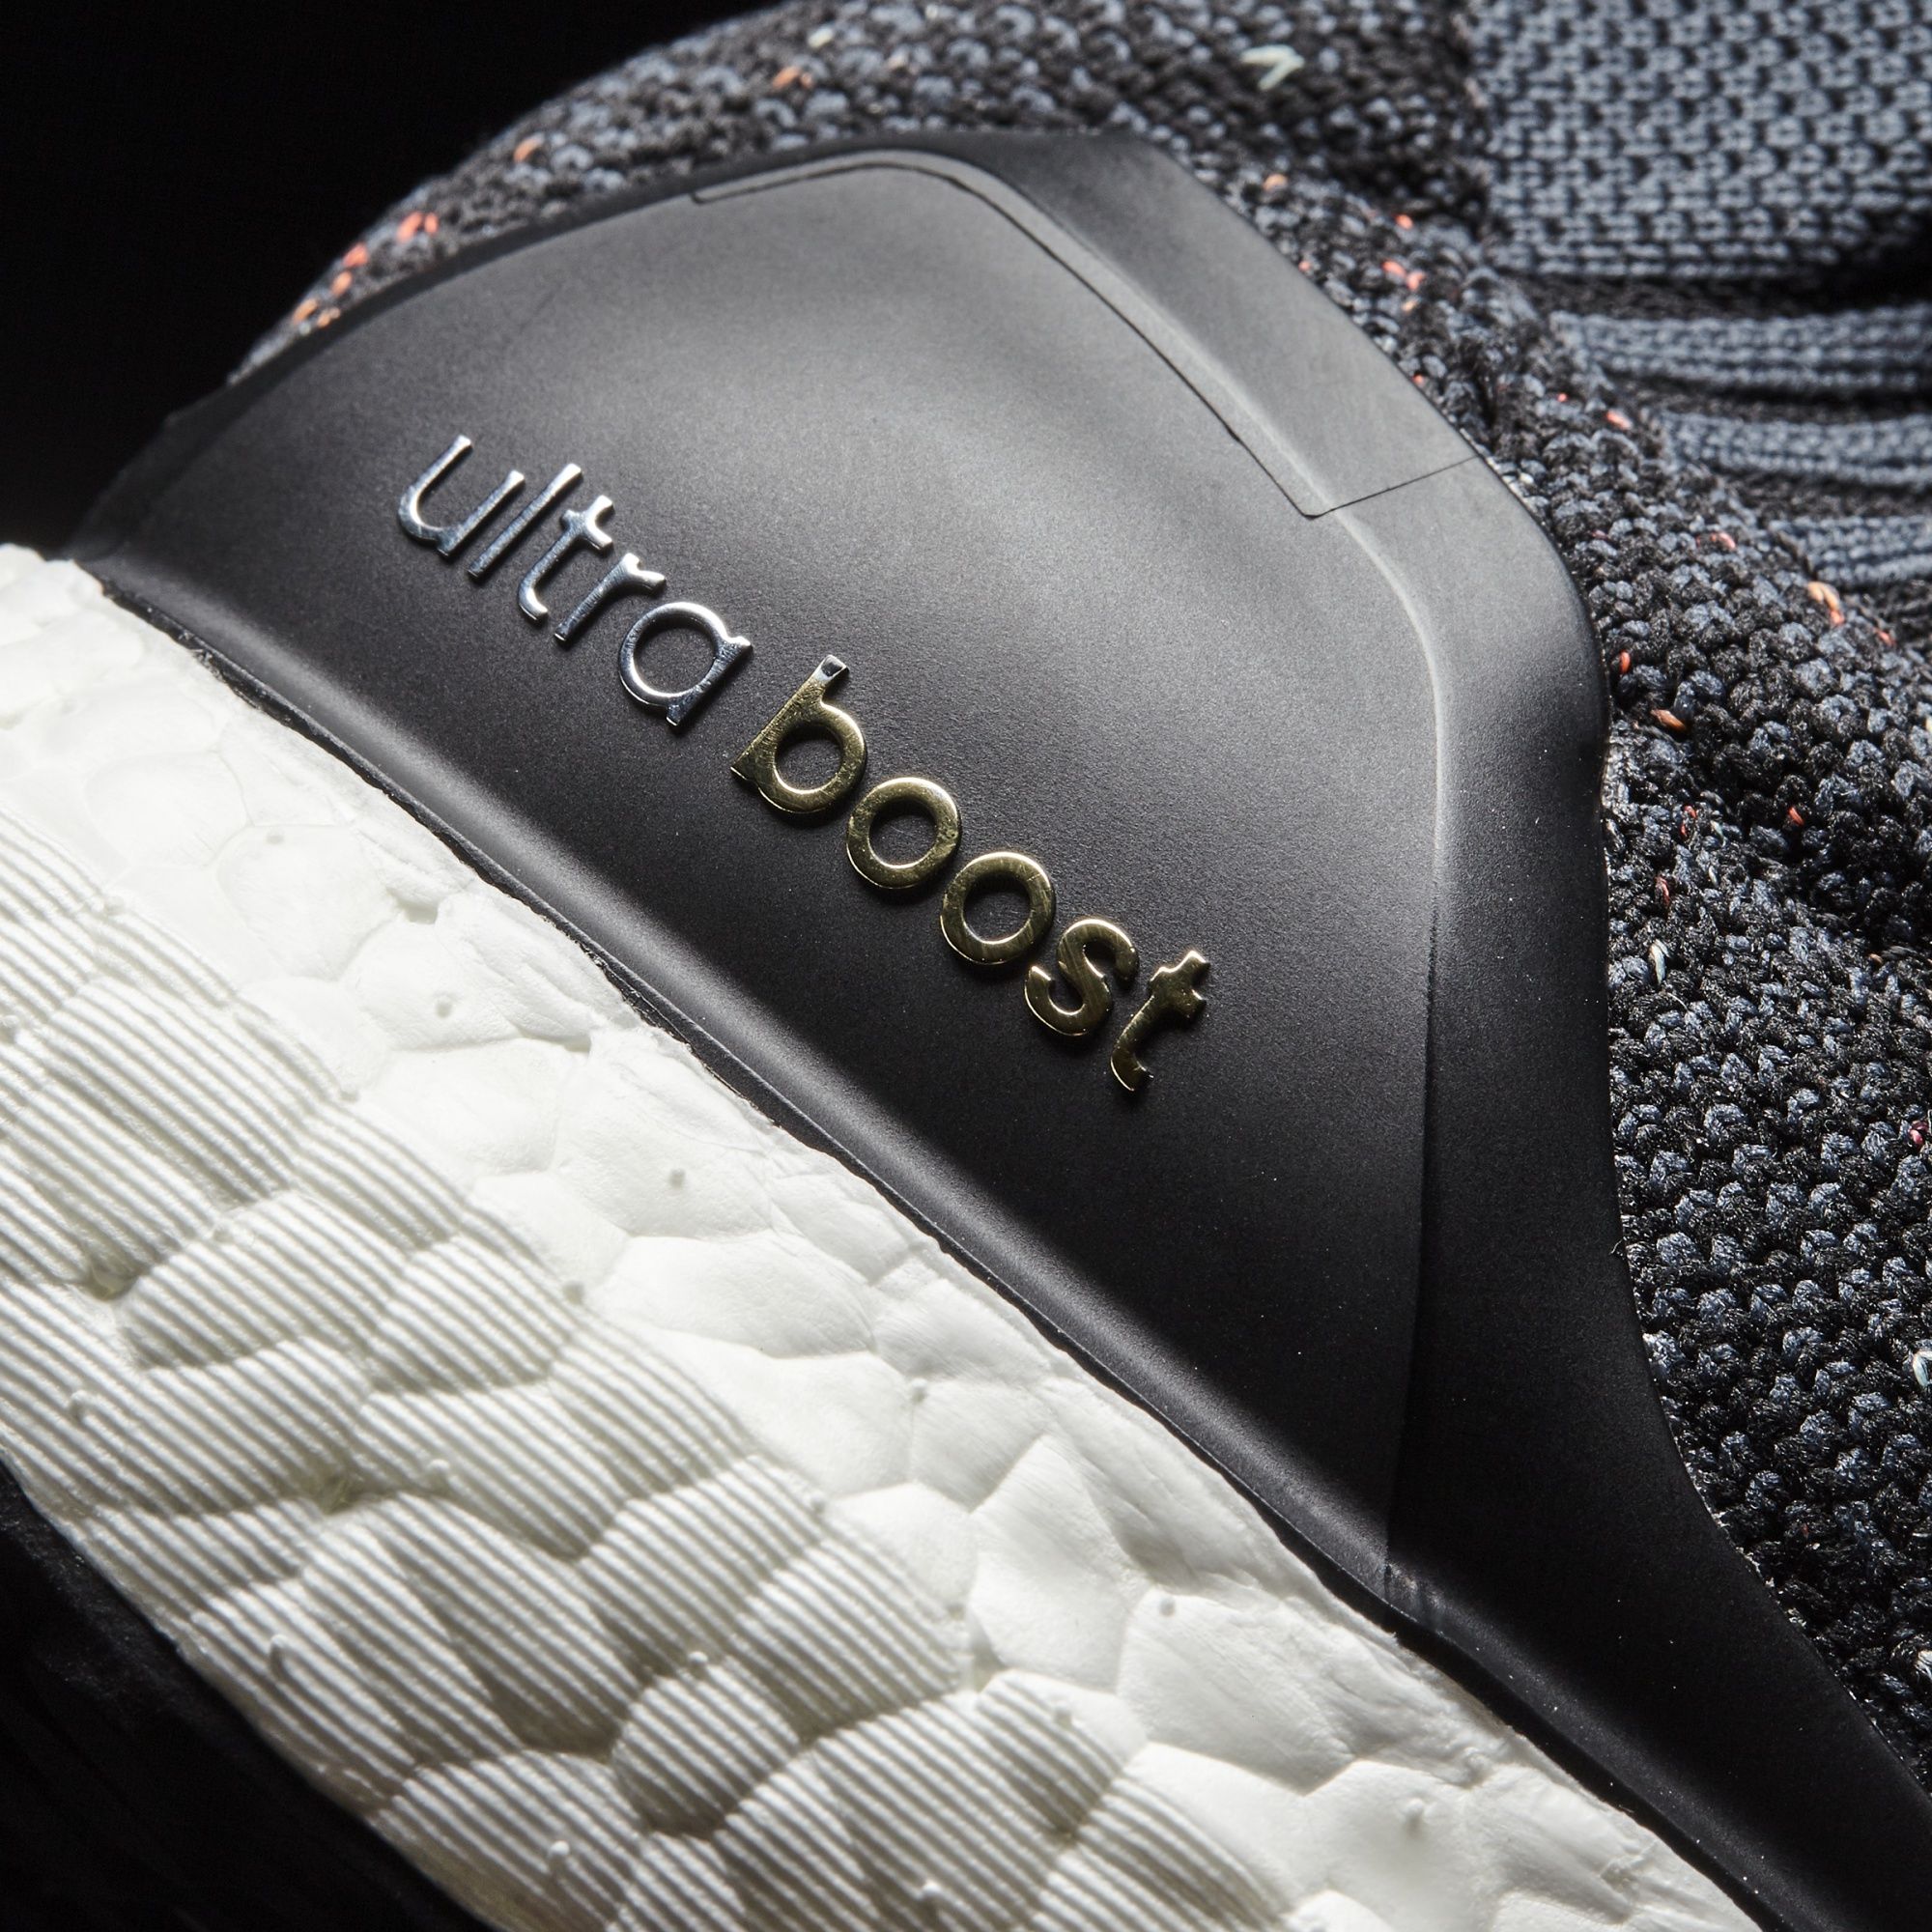 Adidas W Ultra Boost Uncaged
Core Black / Multi-Color